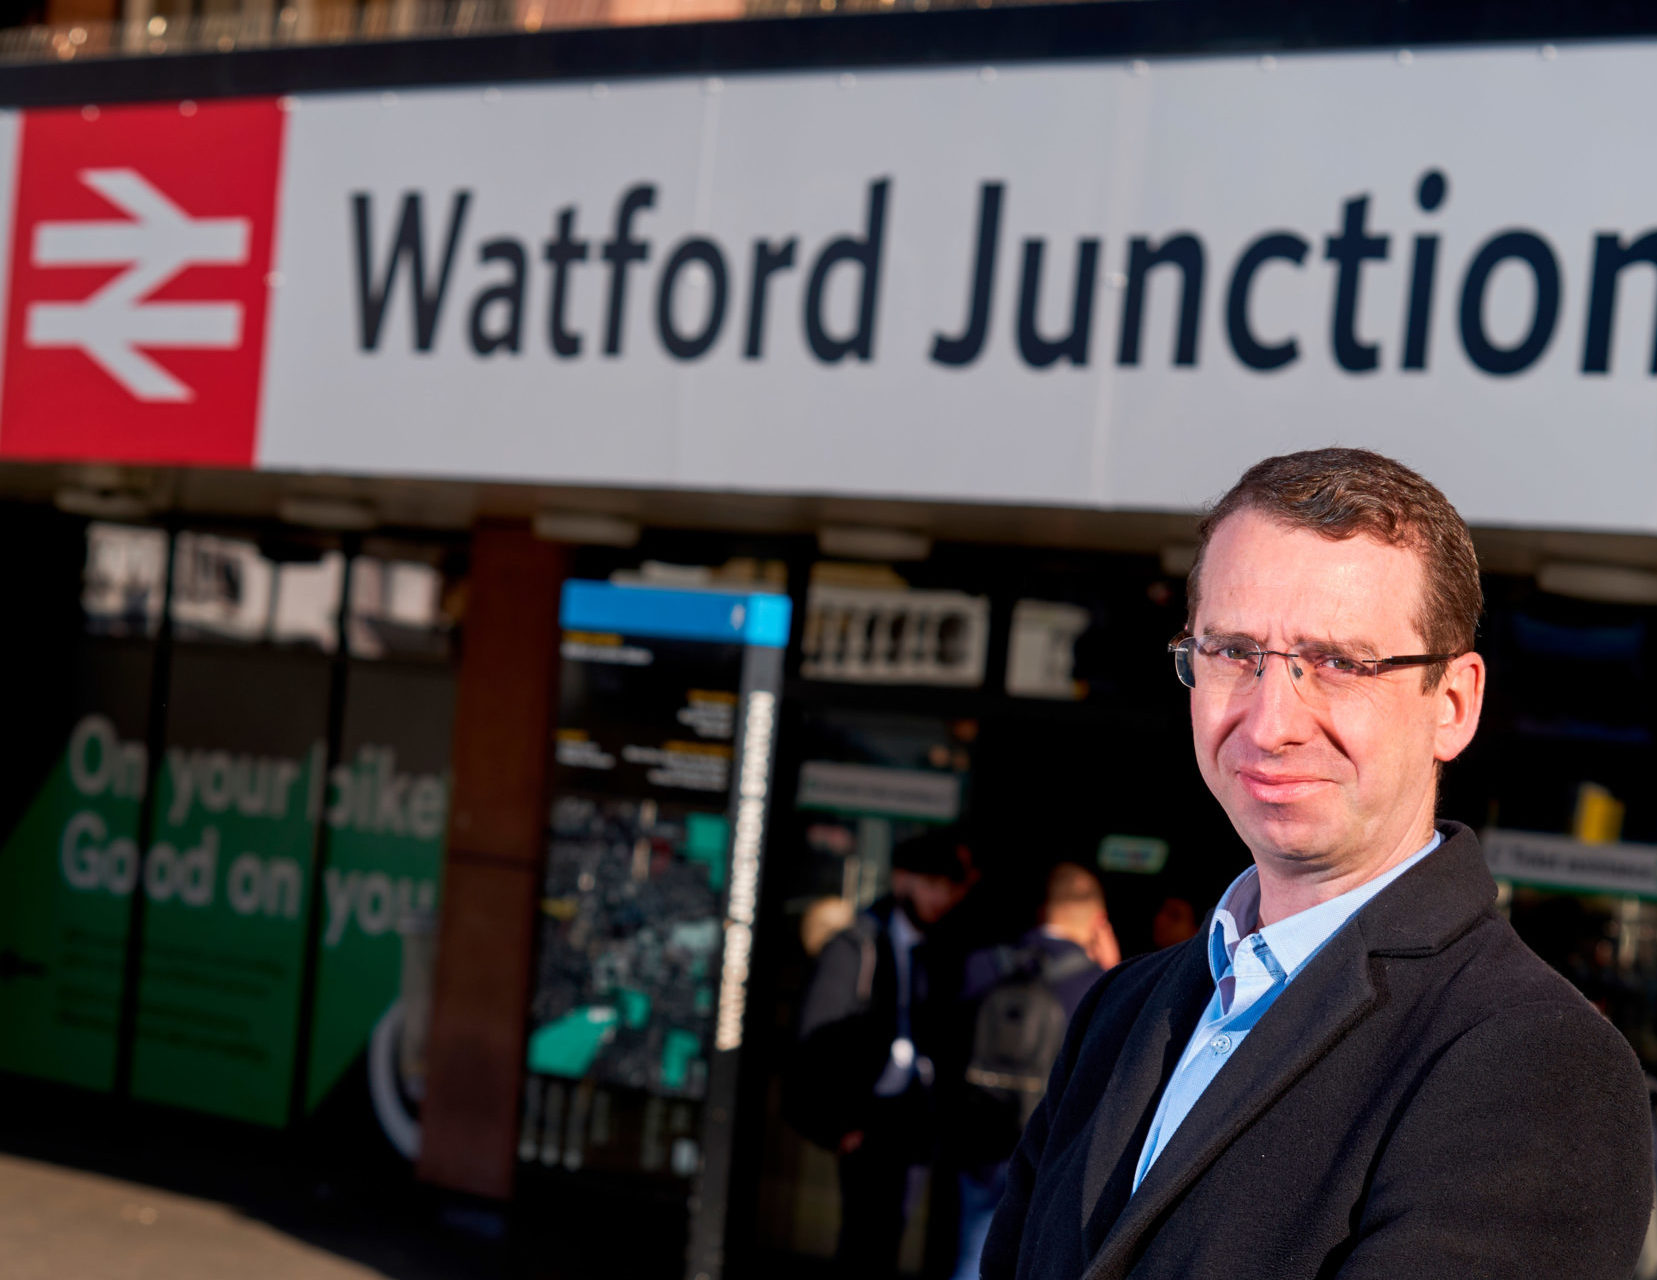 Mayor of Watford outside a Watford Junction tube station